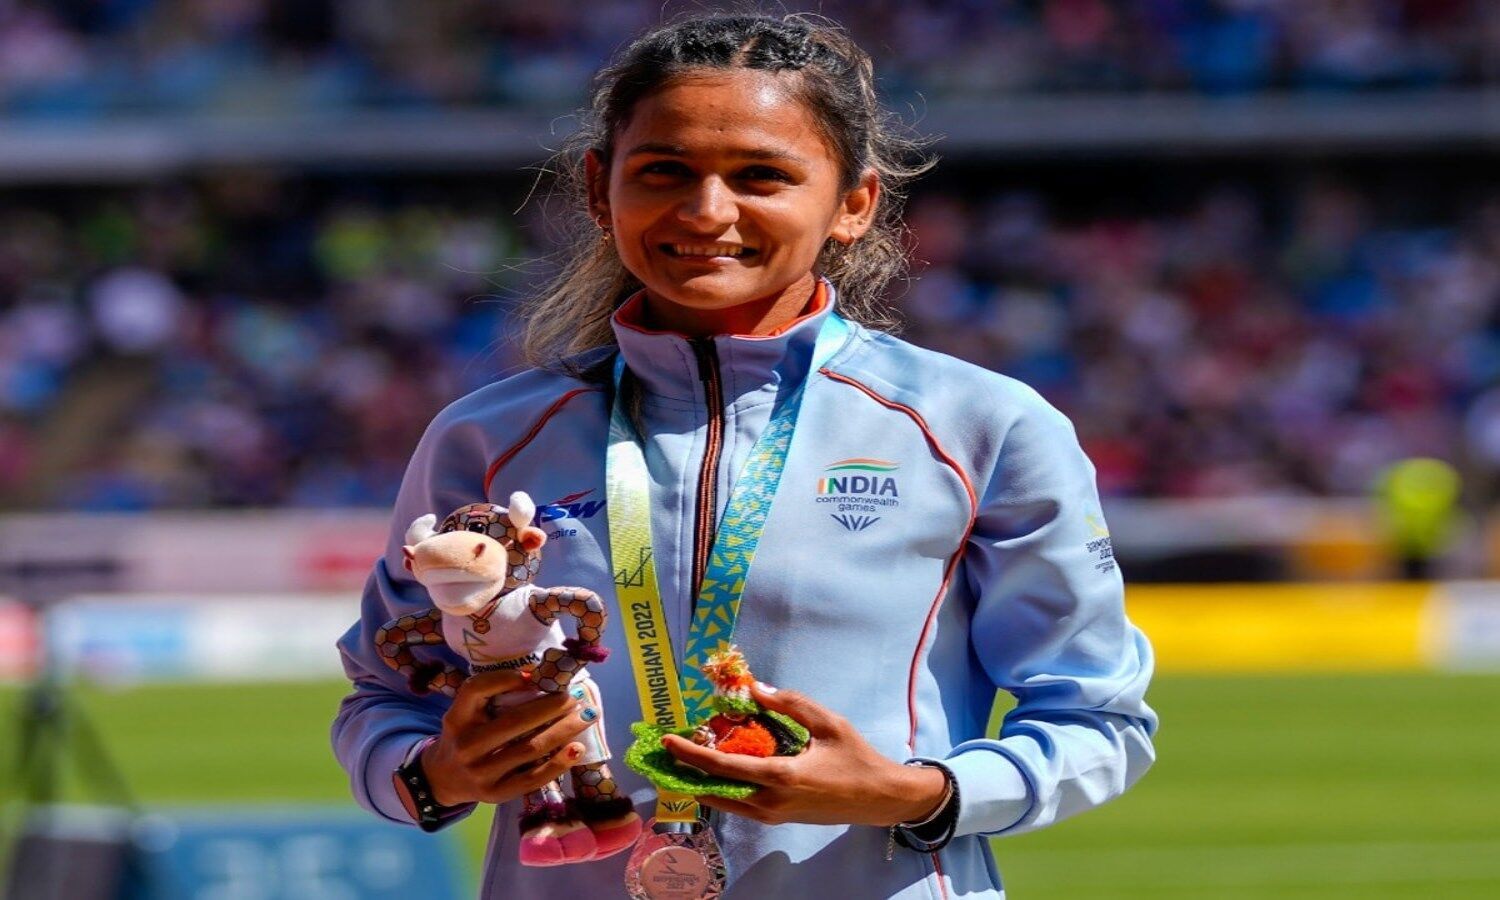 Meerut daughter Priyanka Goswami qualifies for Paris Olympics 2024 News